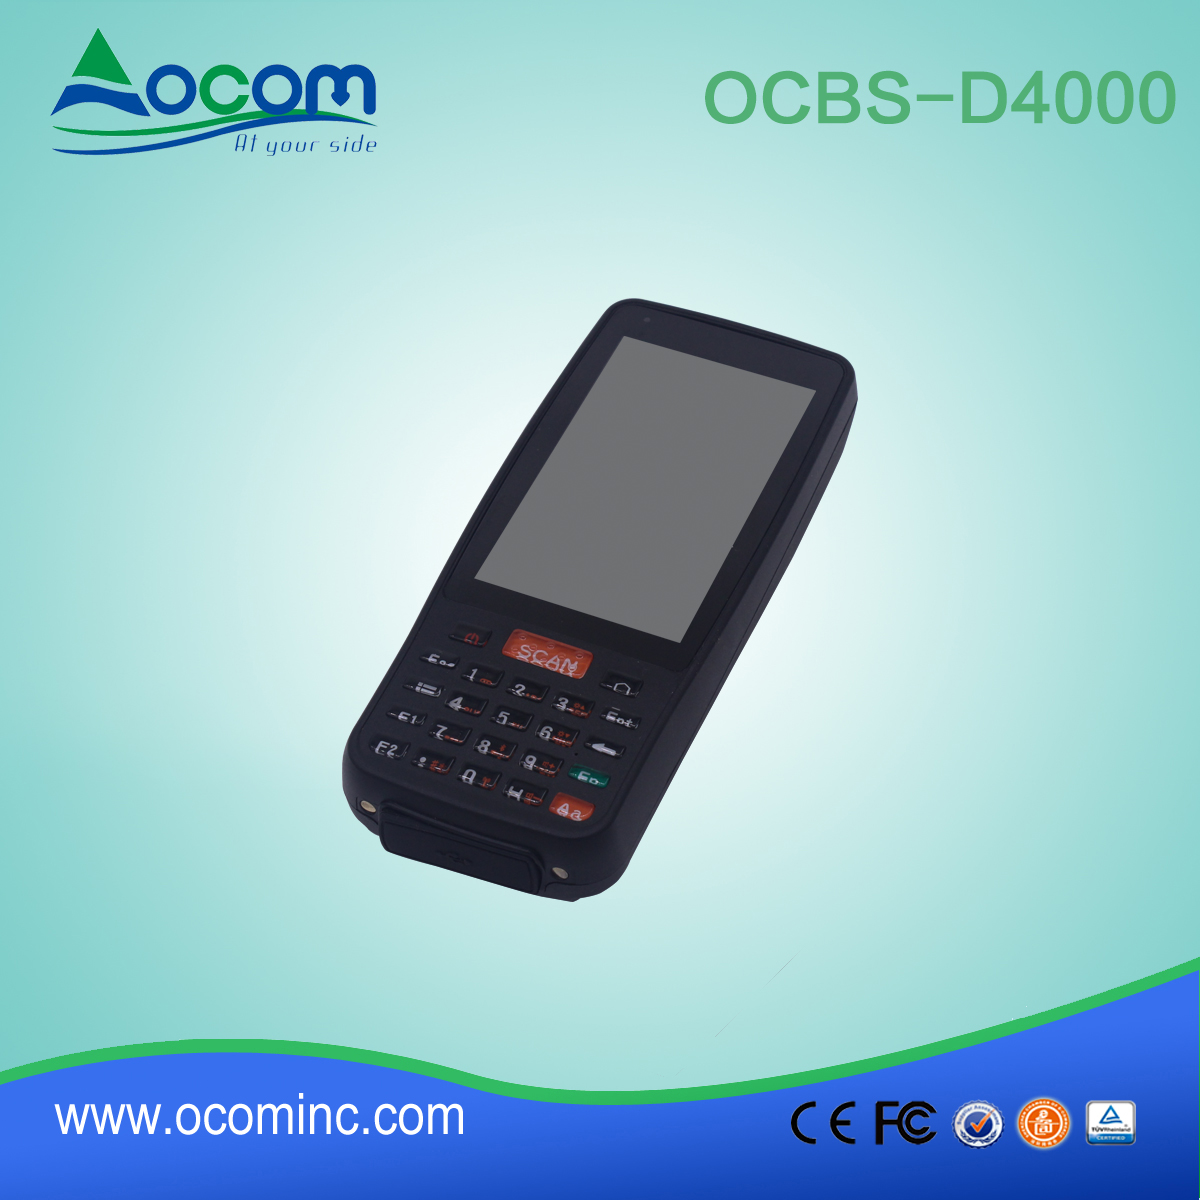 OCBS-D4000 Handheld Android Mobile PDA συσκευή Barcode Scanner PDA